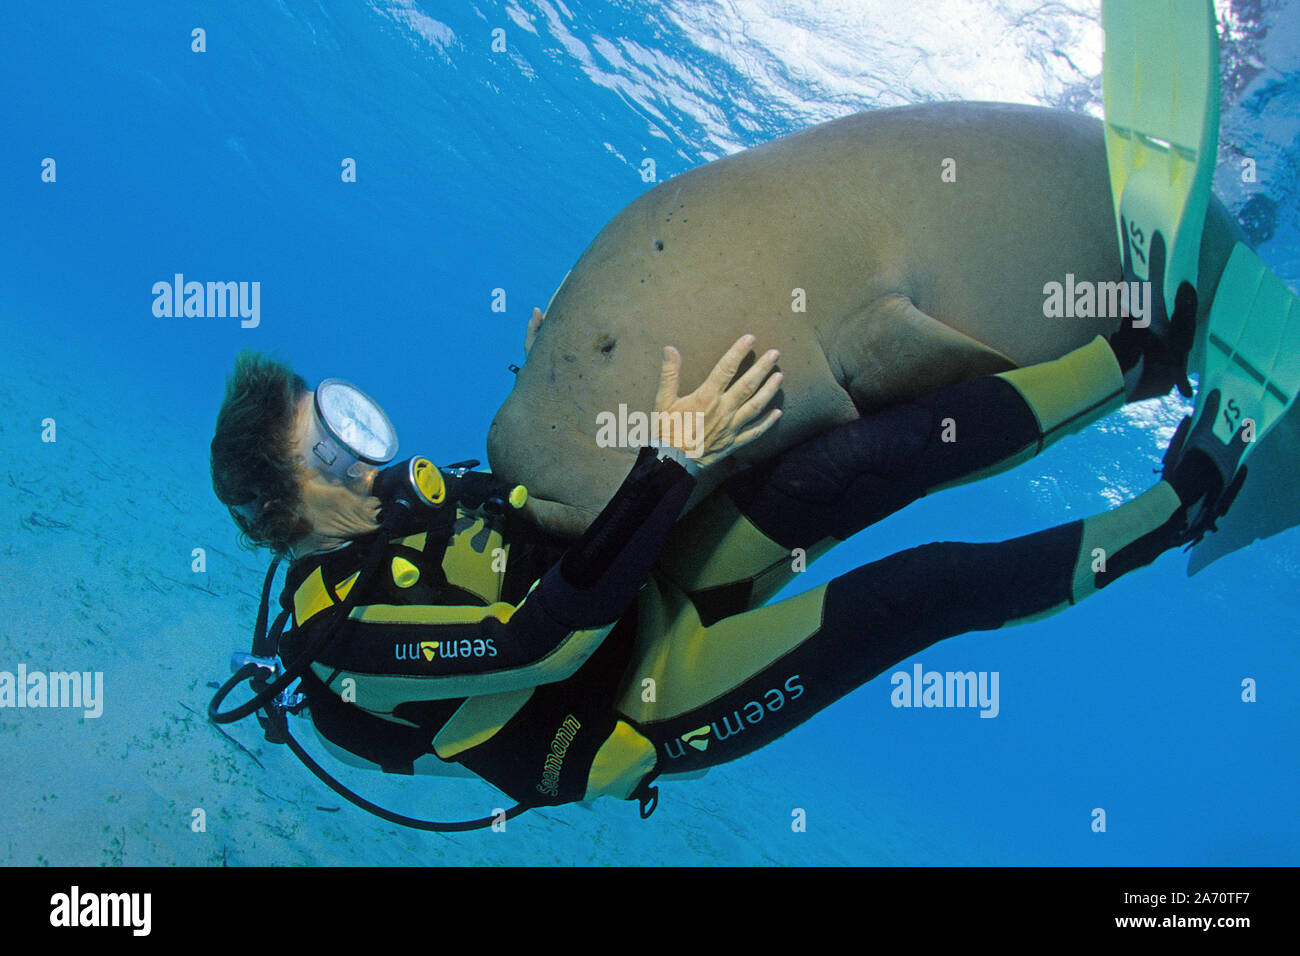 Taucher und verspielter Dugong, Gabelschwanzseekuh (Dugong dugon), Borneo, Malaysia | Scuba diver with Dugong (Dugong dugon), playing together, Borneo Stock Photo